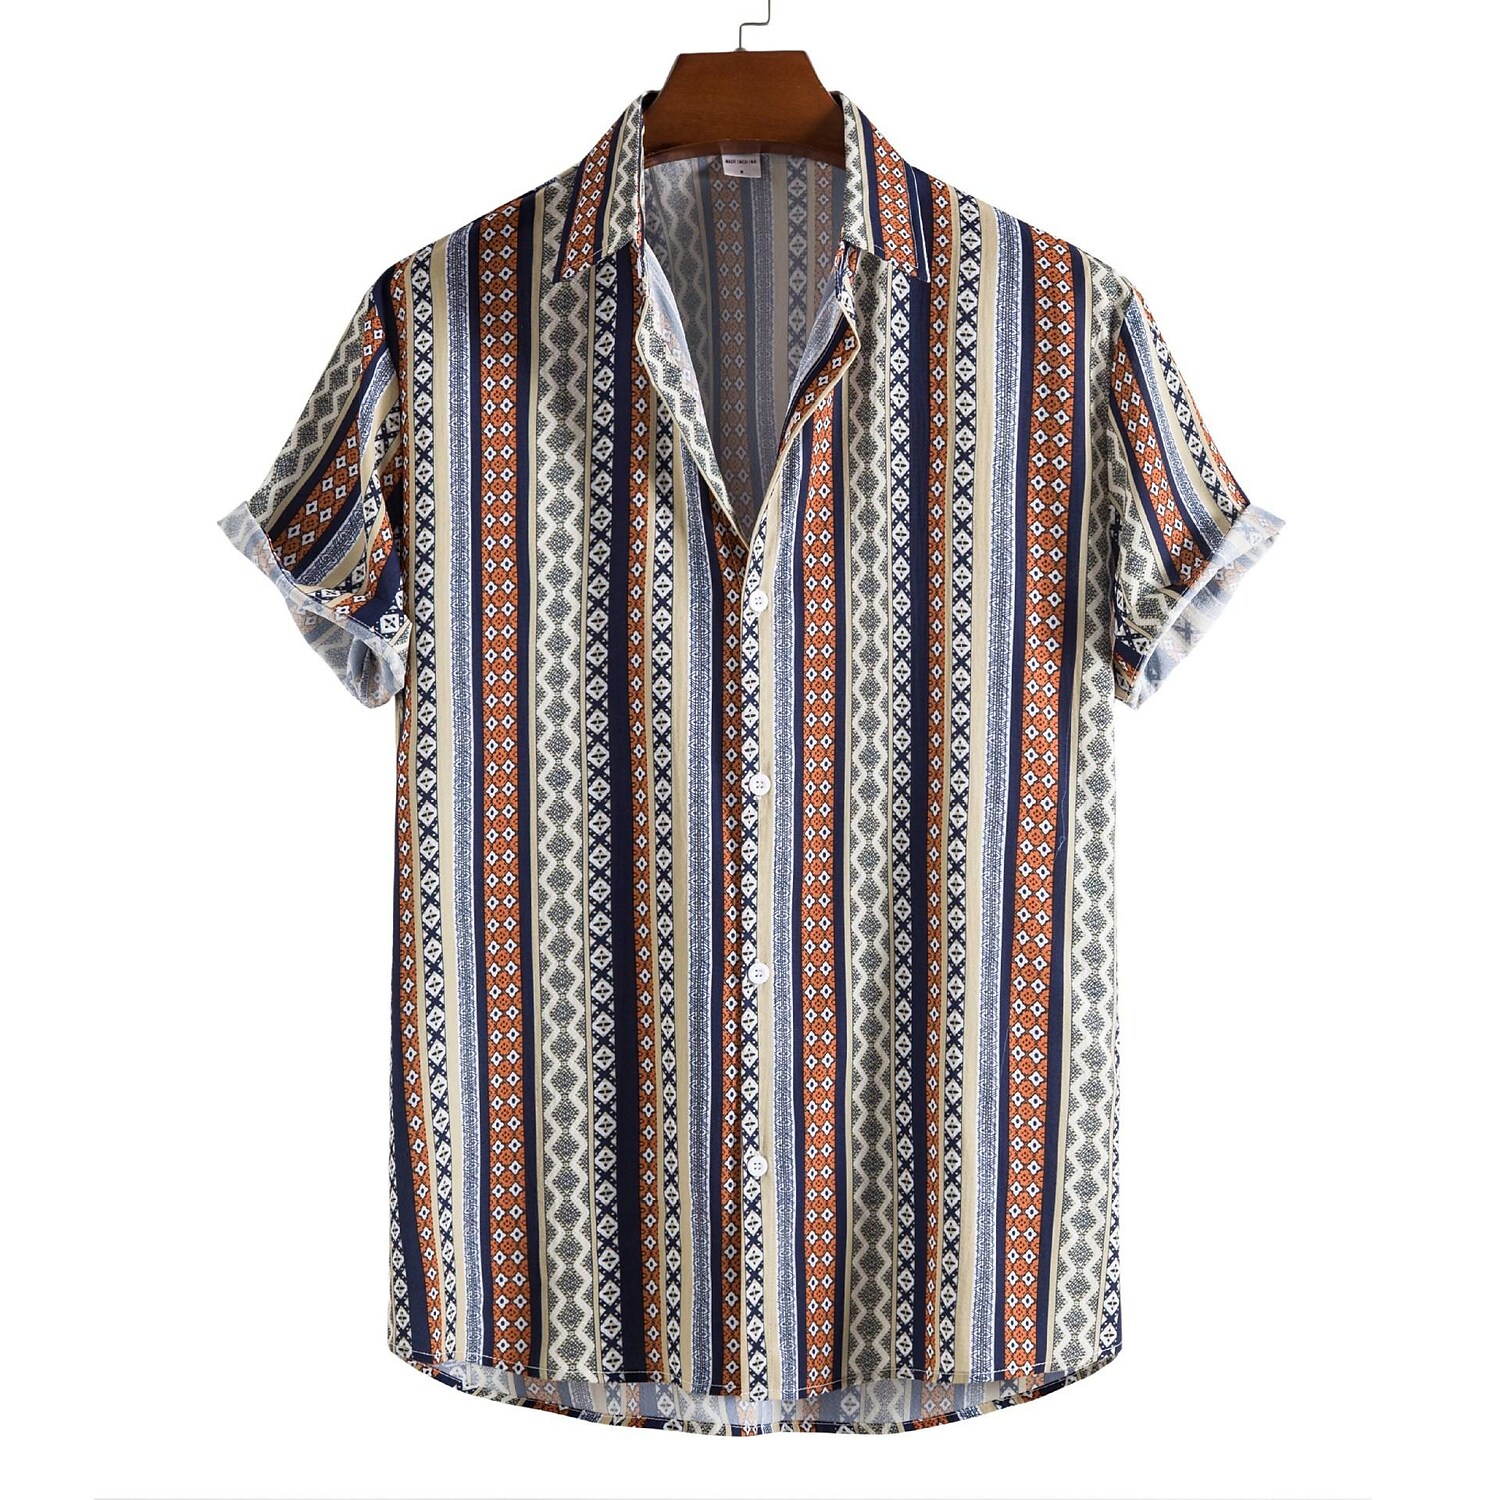 Men's Print Striped Button-Down Short Sleeve Shirt 